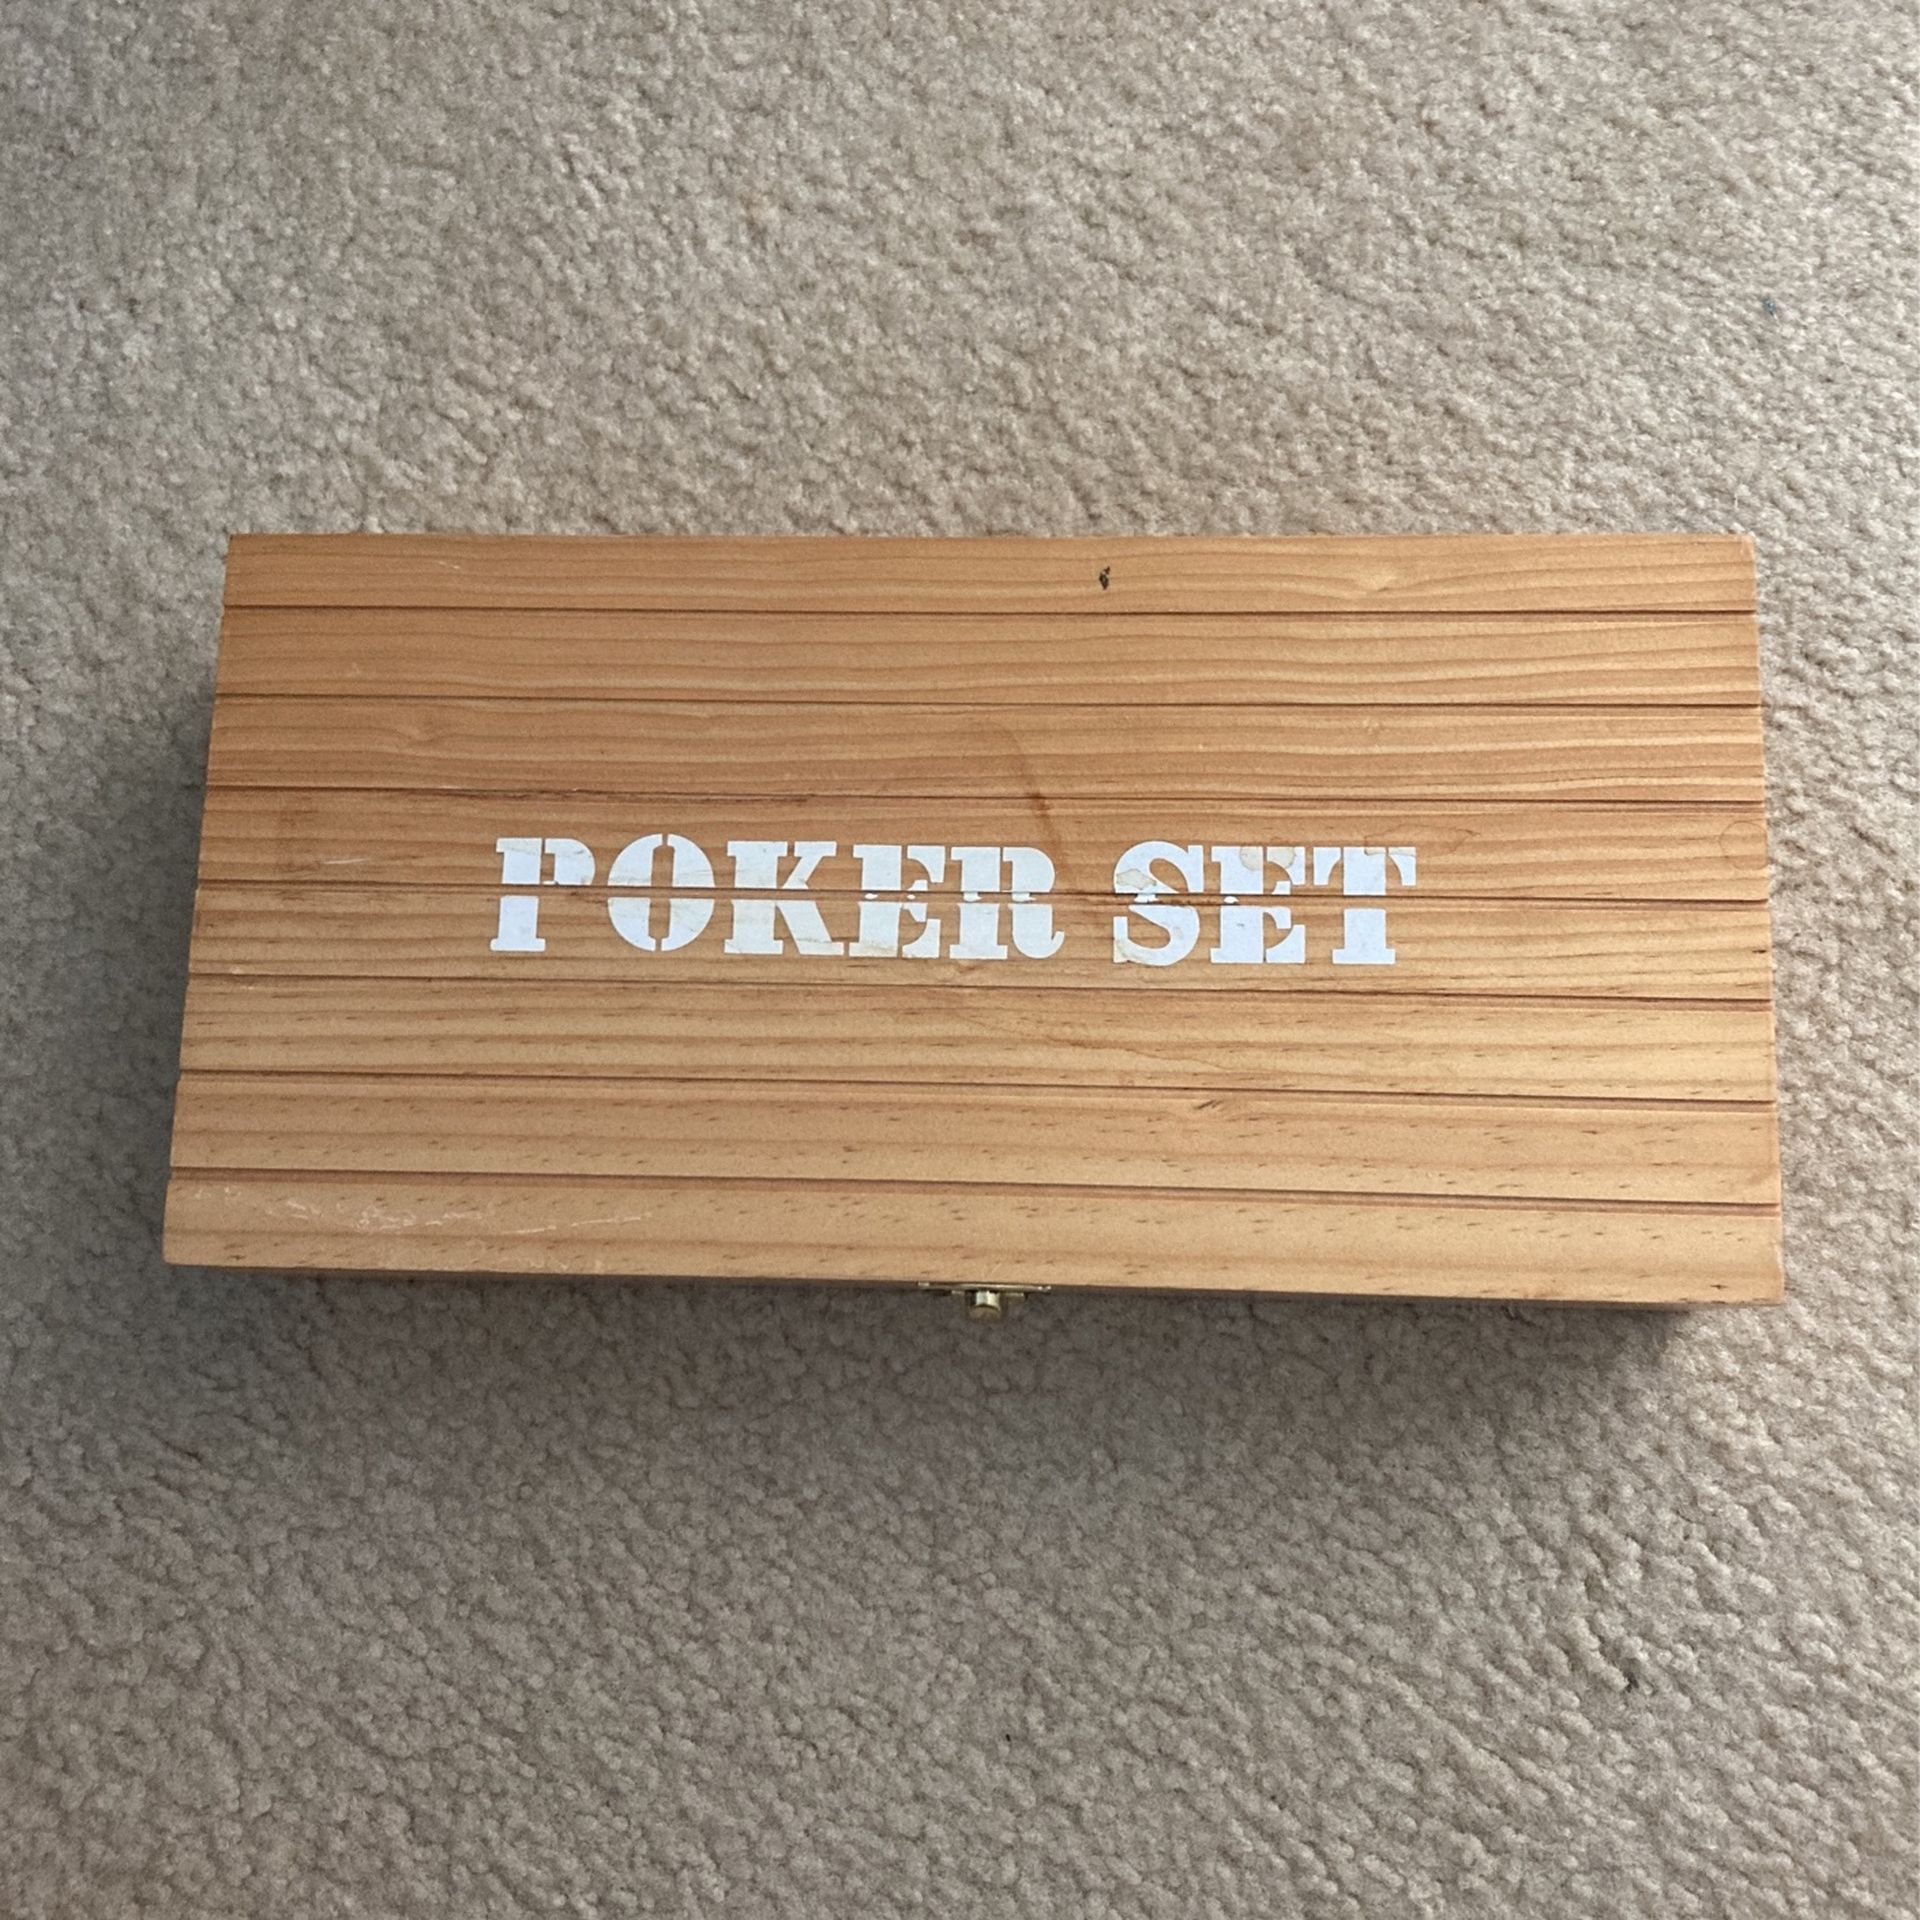 Poker Set Brand New